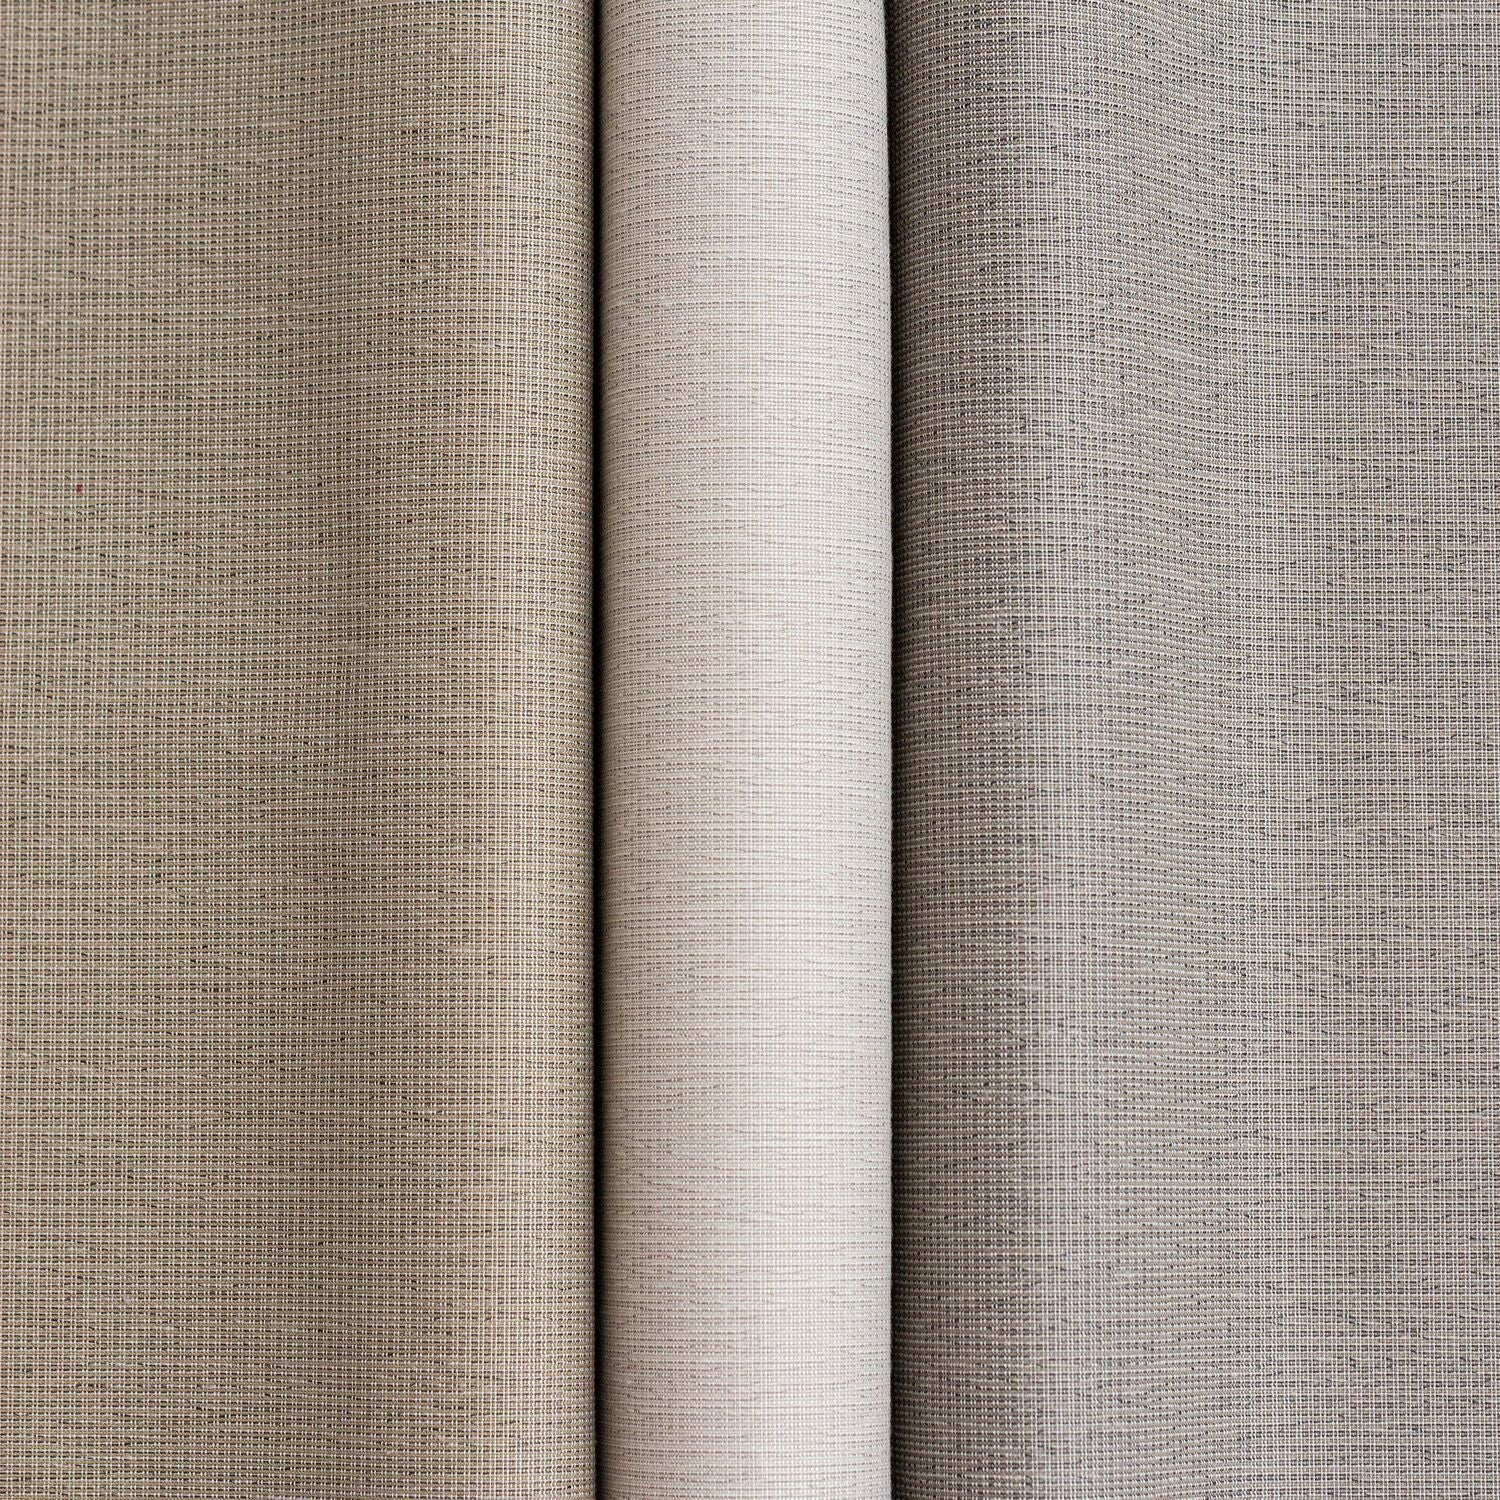 Linen Weave - 1018